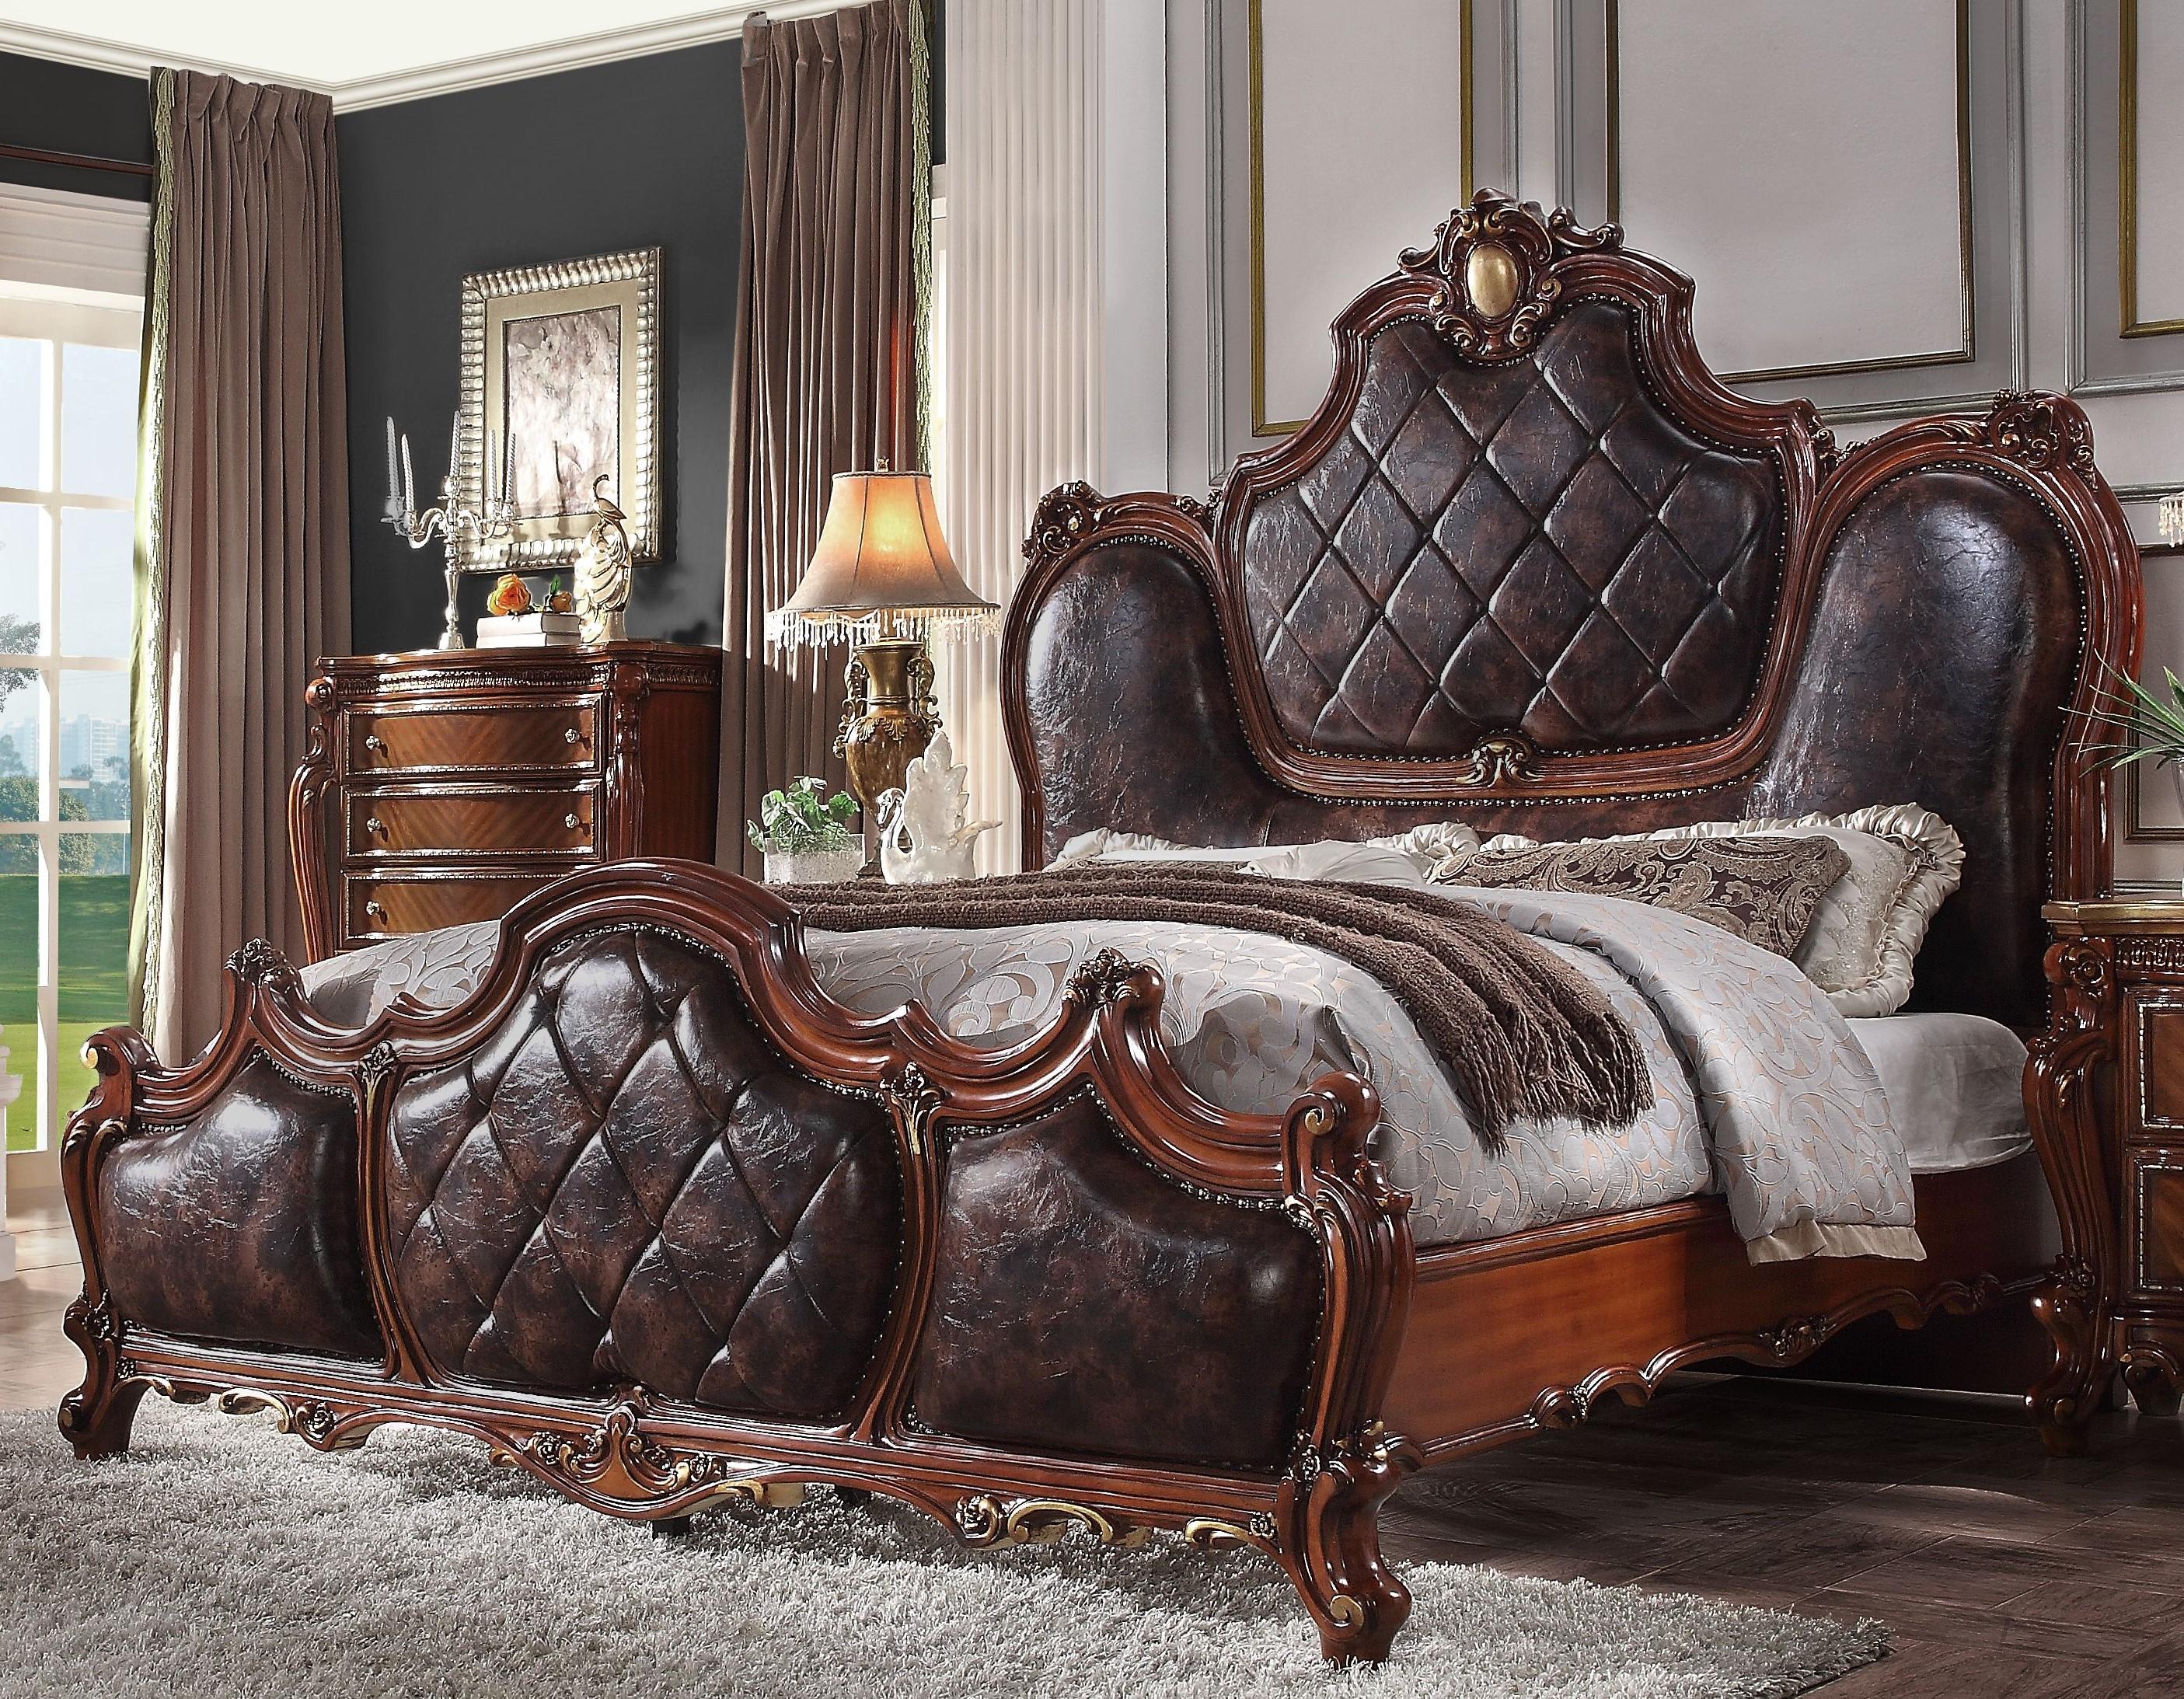 

    
Antique Cherry Oak Tufted King Bedroom Set 5Pcs Picardy-28237EK Acme Classic Traditional
